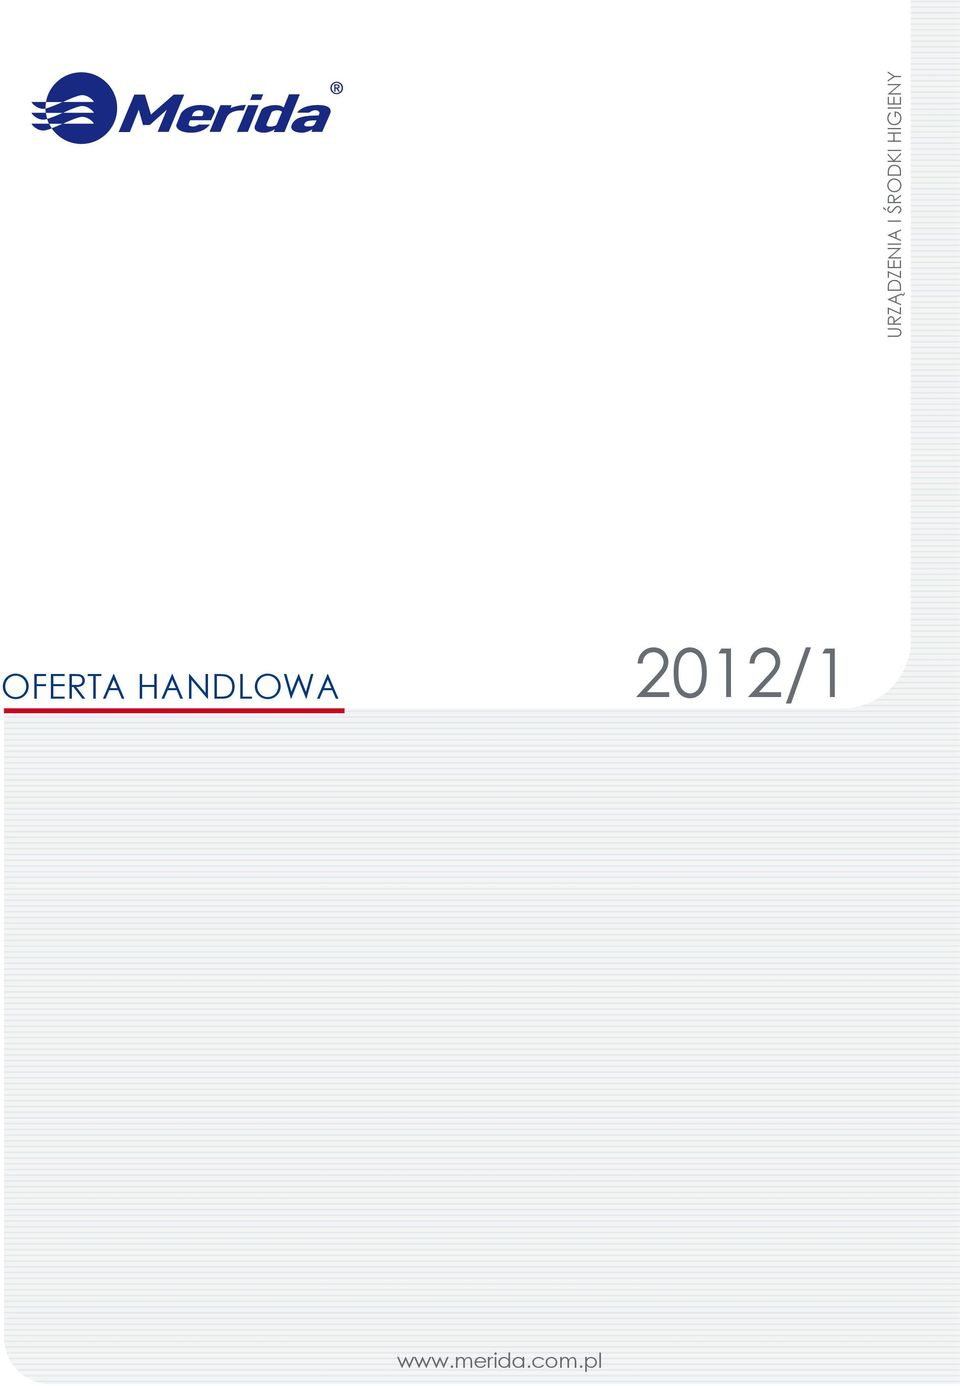 OFERTA HANDLOWA